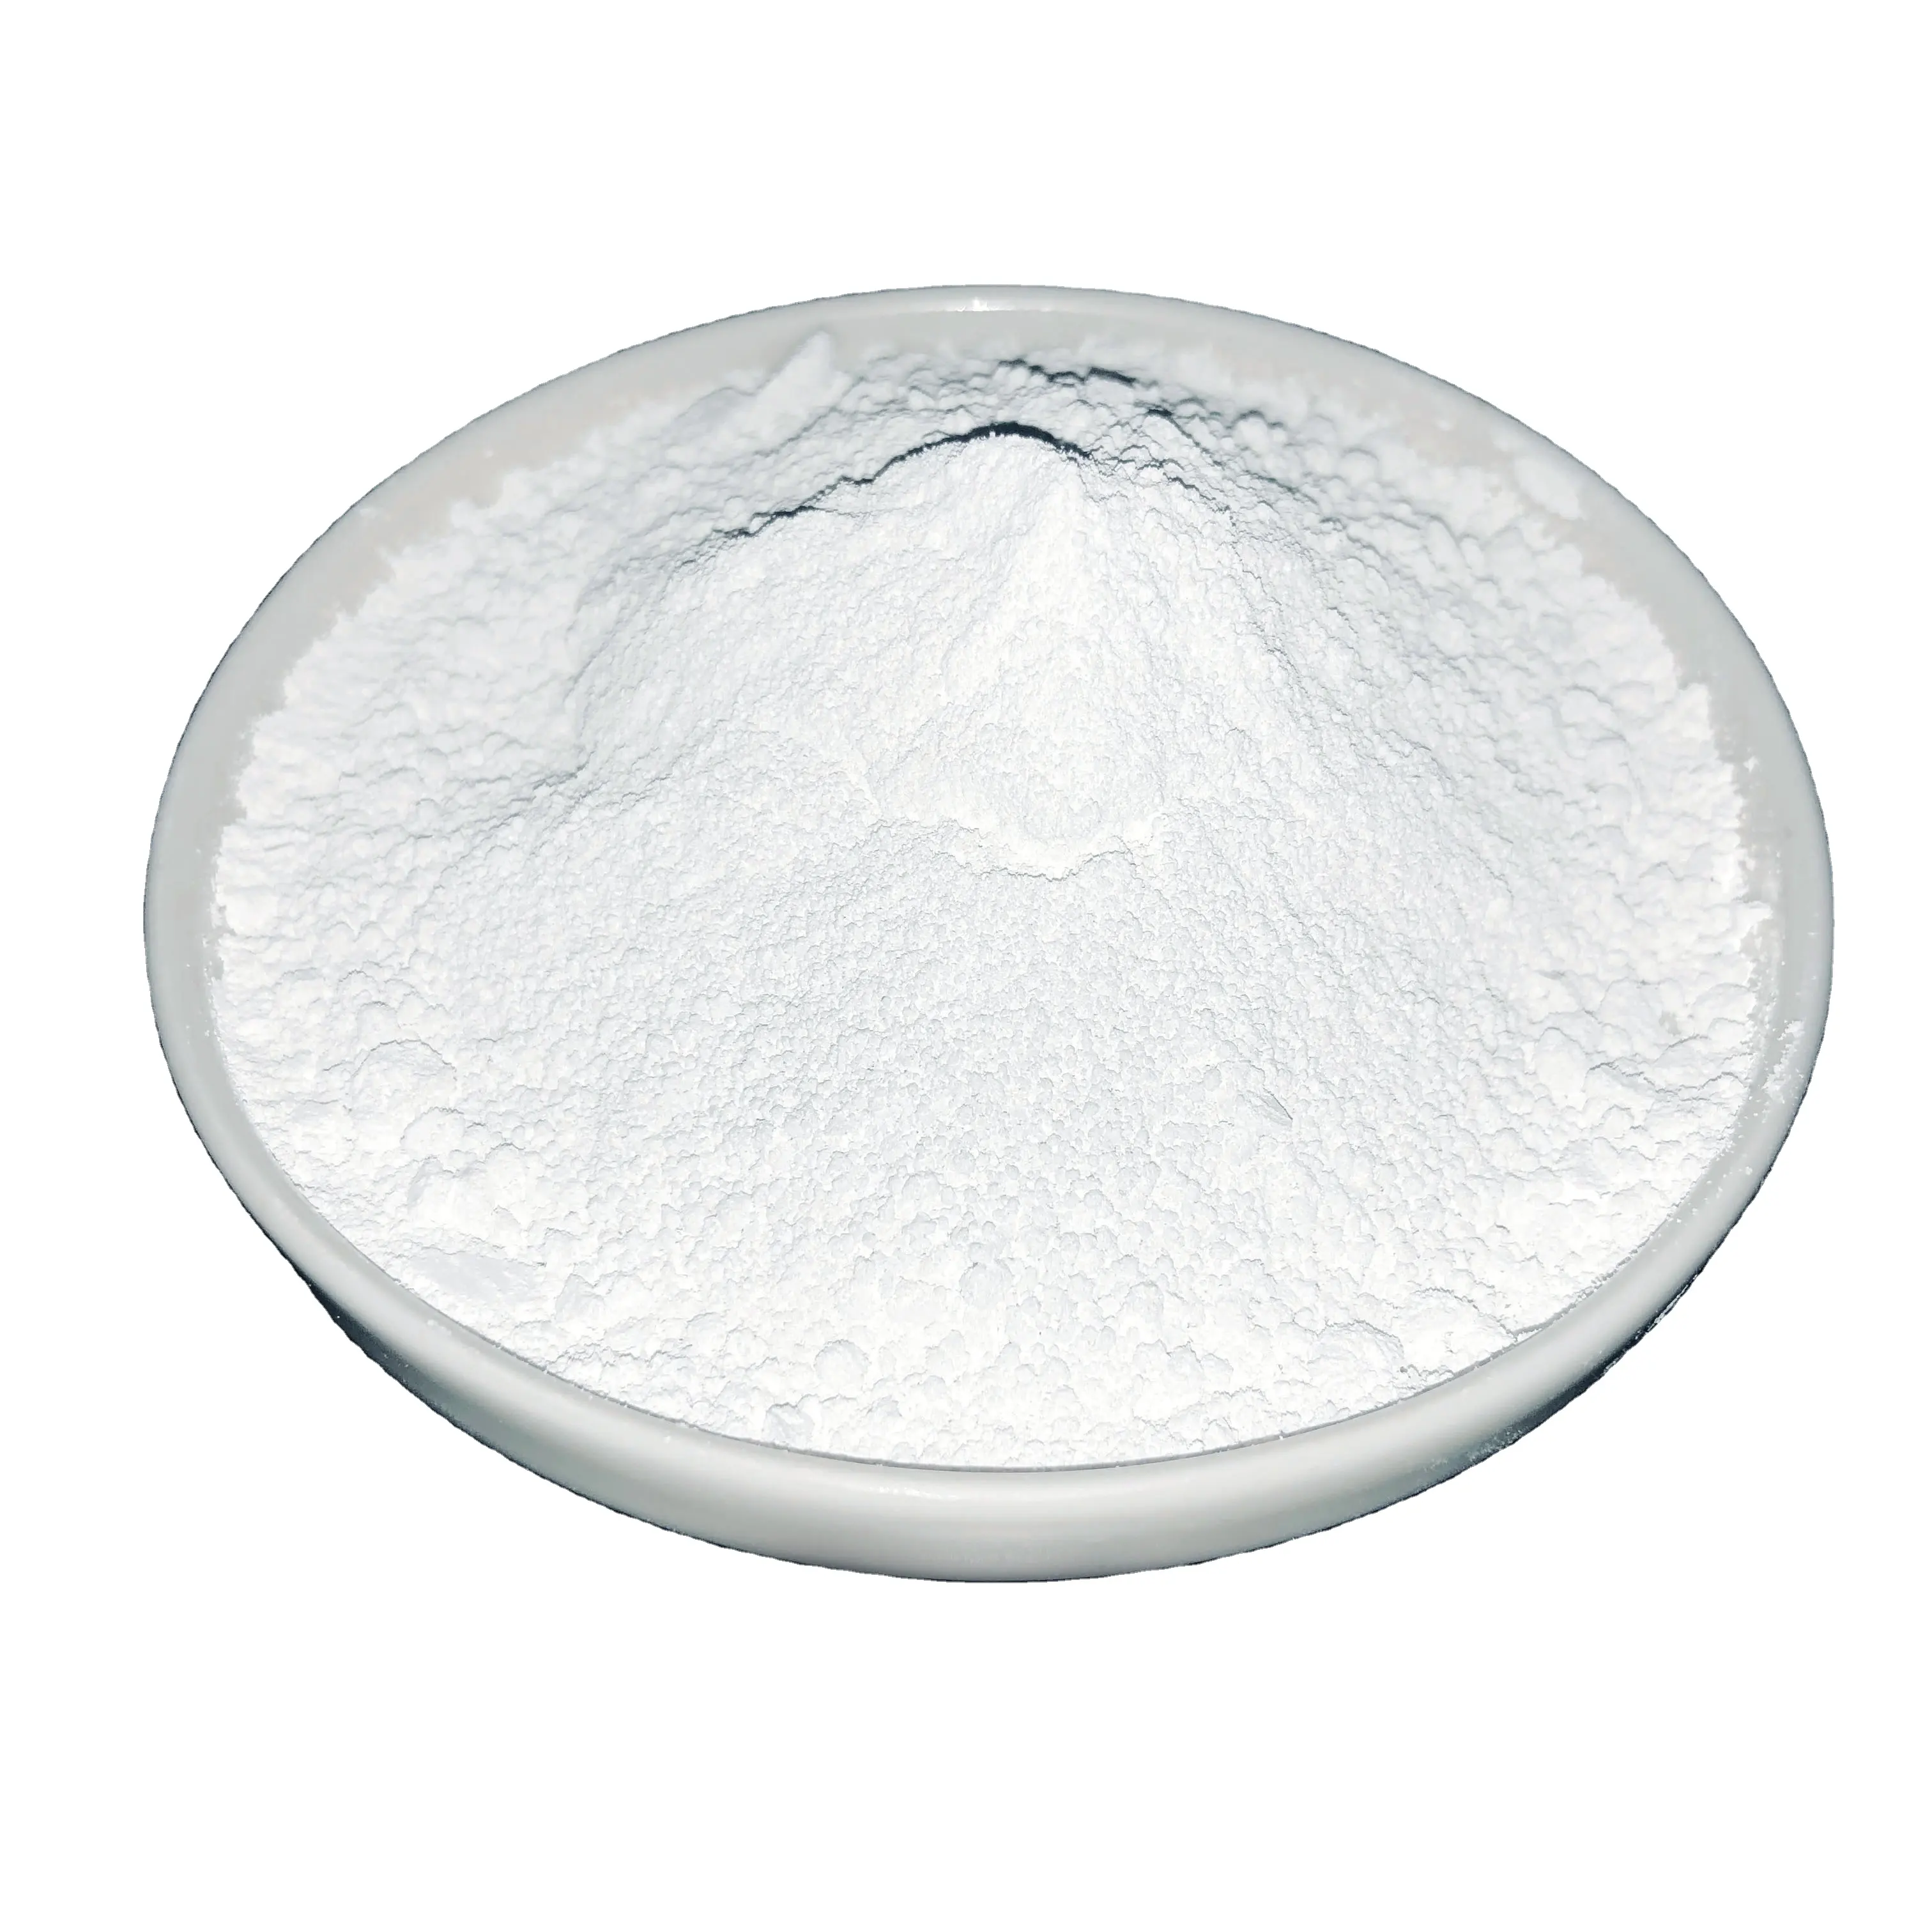 Tio2 dióxido de titanio para las placas de cerámica de titanio anatasa Dióxido de precio para cerámica